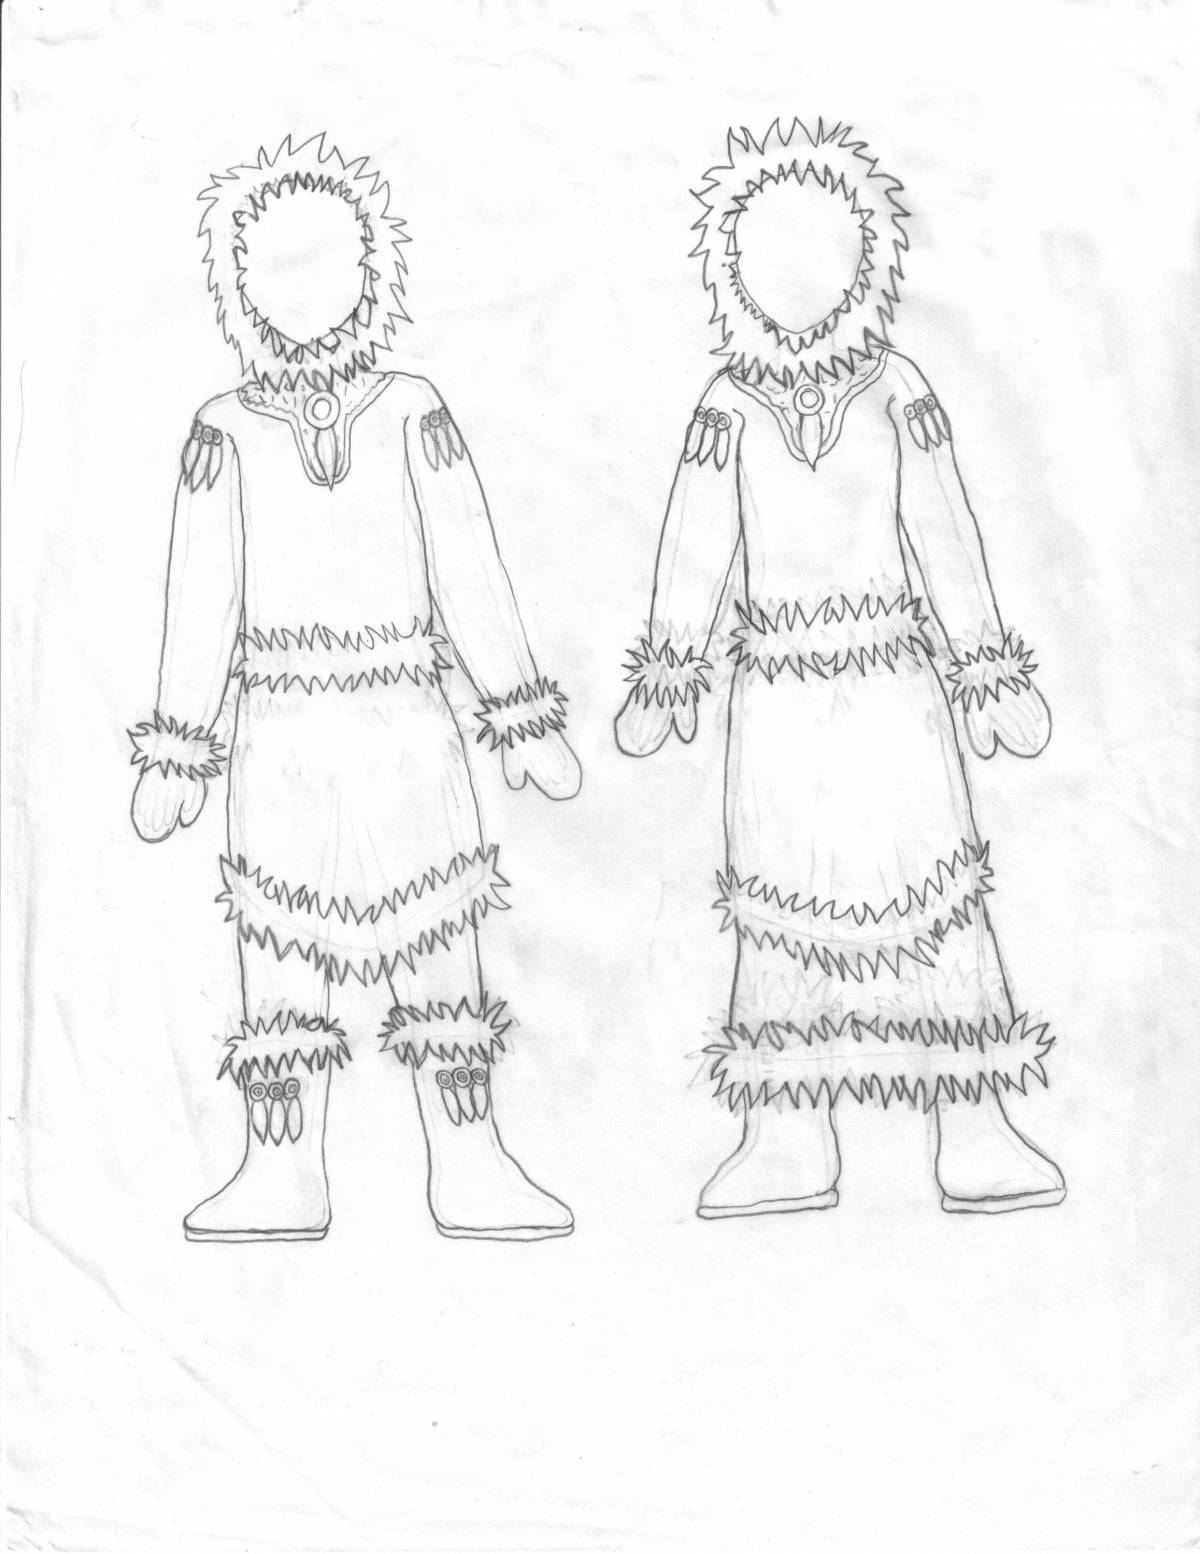 Chukchi unique national costume coloring book